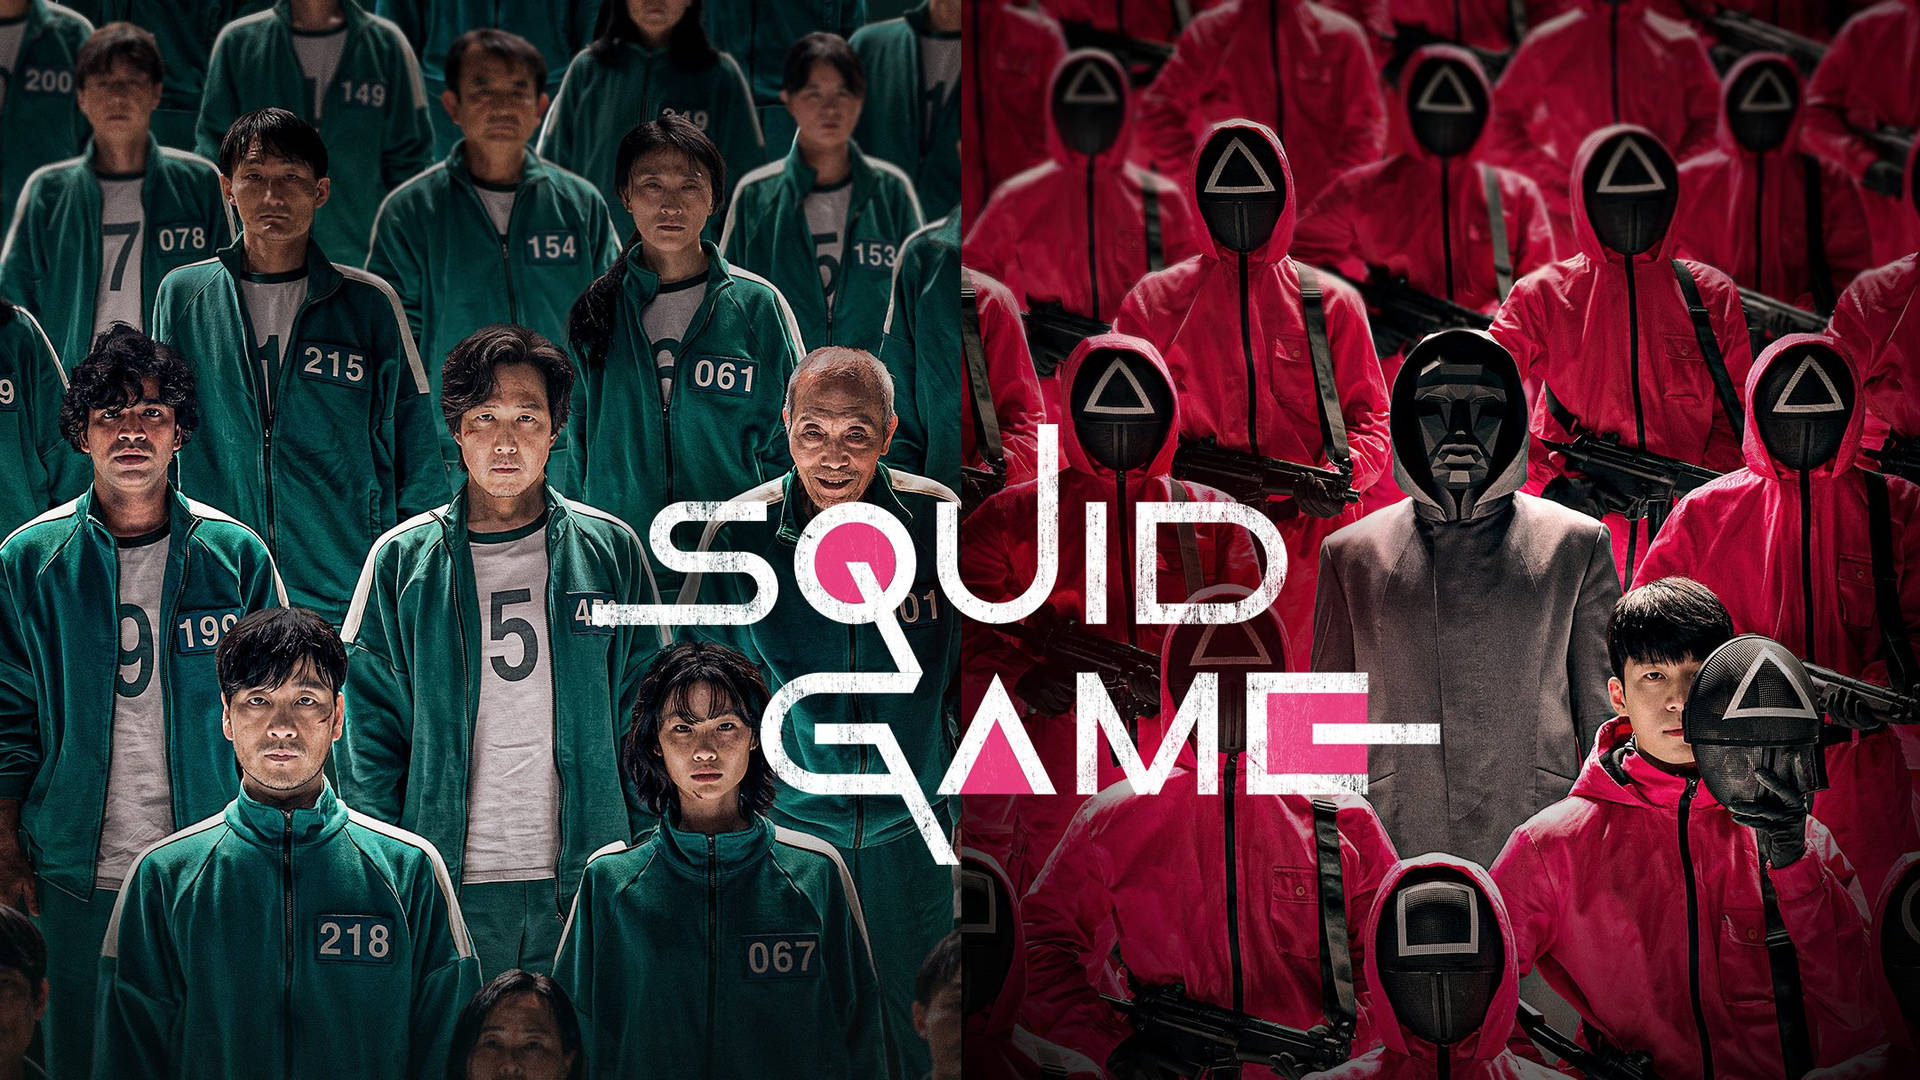 Squid Game 067 Main Title Wallpaper